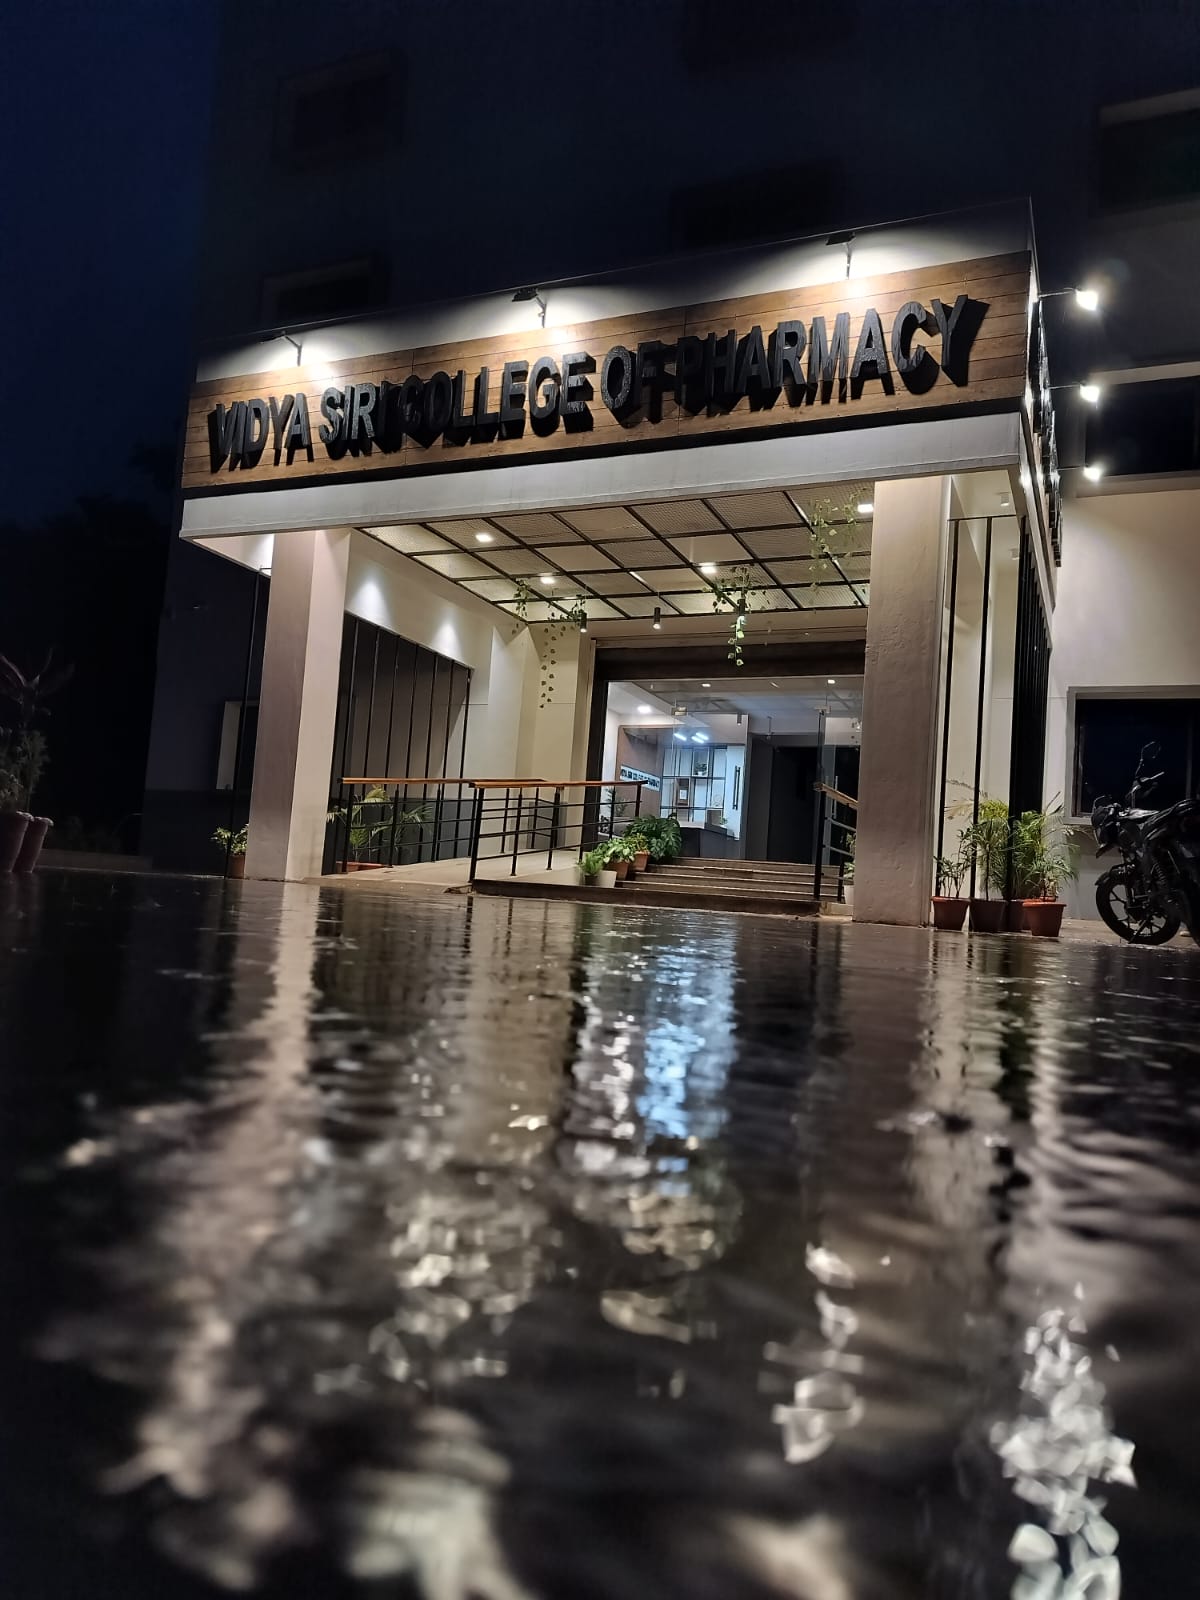 College entrance with name board - Vidya Siri College of Pharmacy